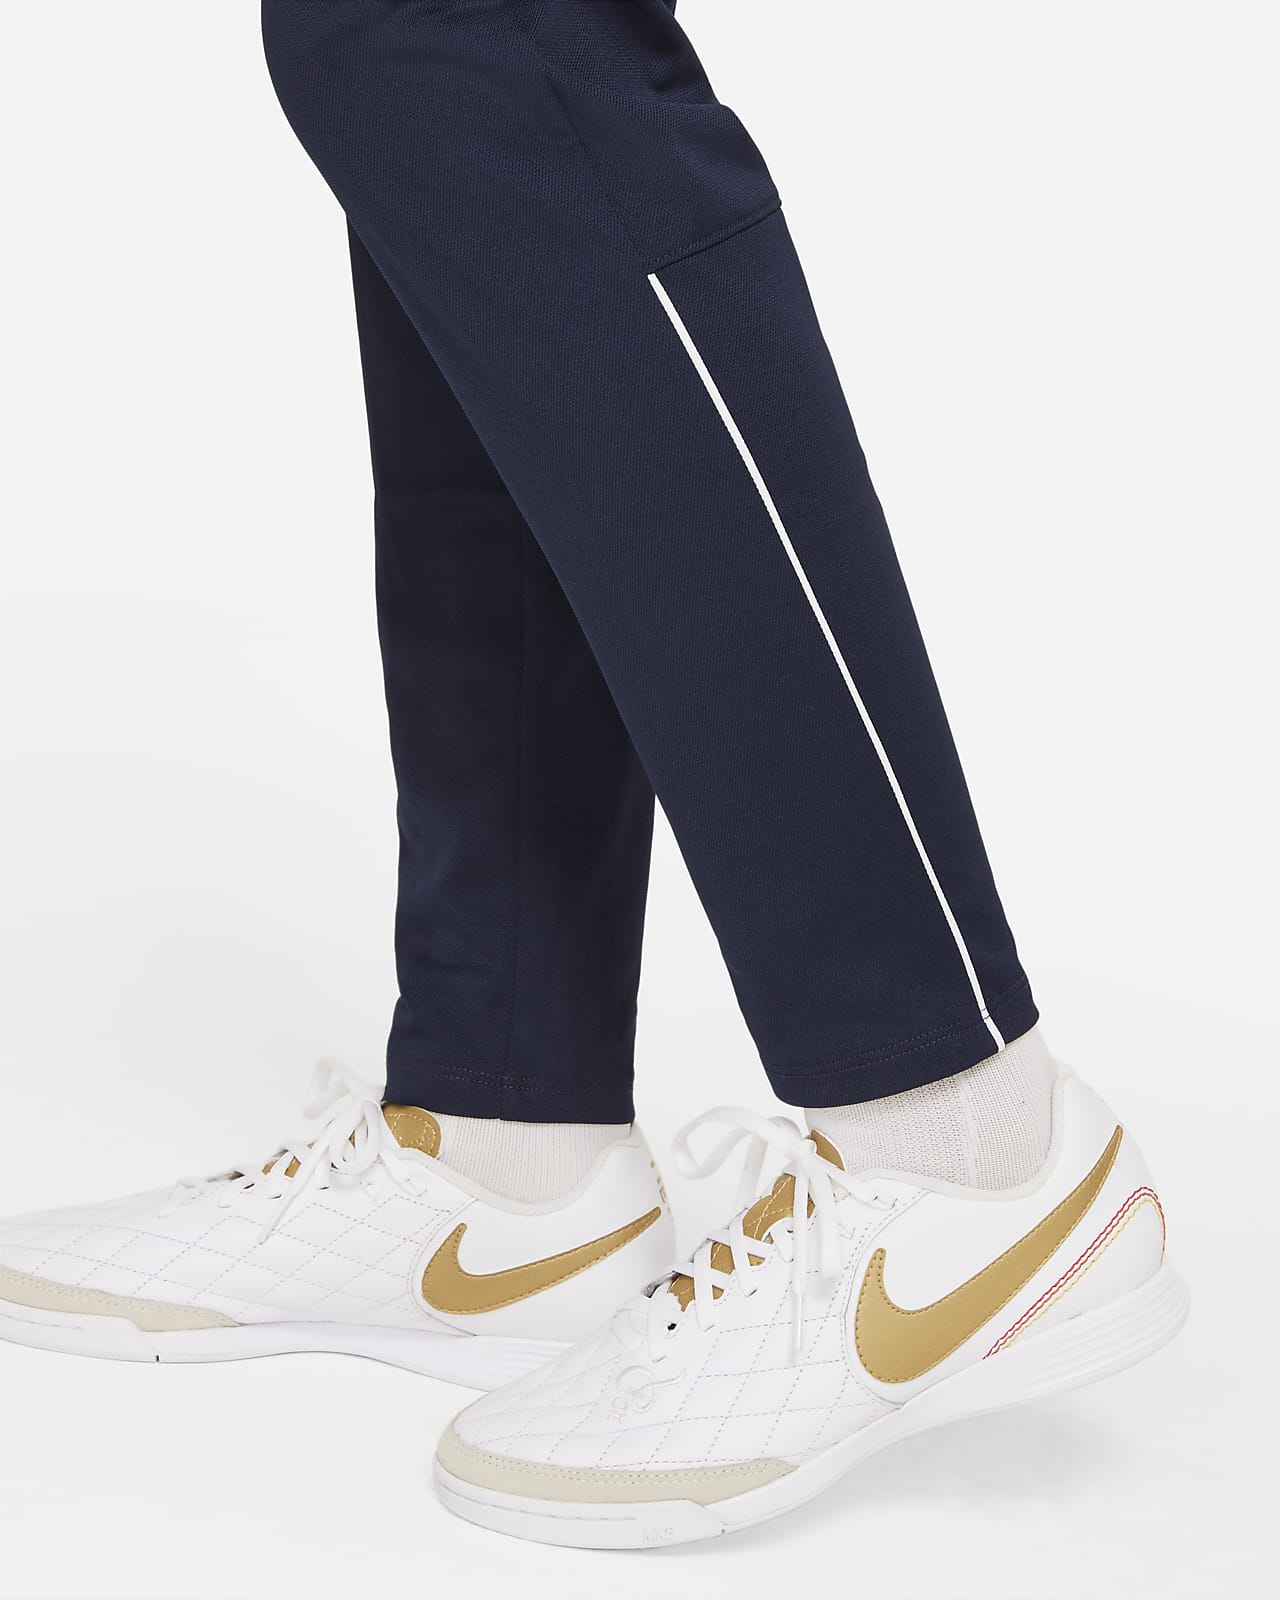 Nike Dry Academy 21 Knit Soccer Pant Women's M Navy Blue CV2665 Dri-Fit  White